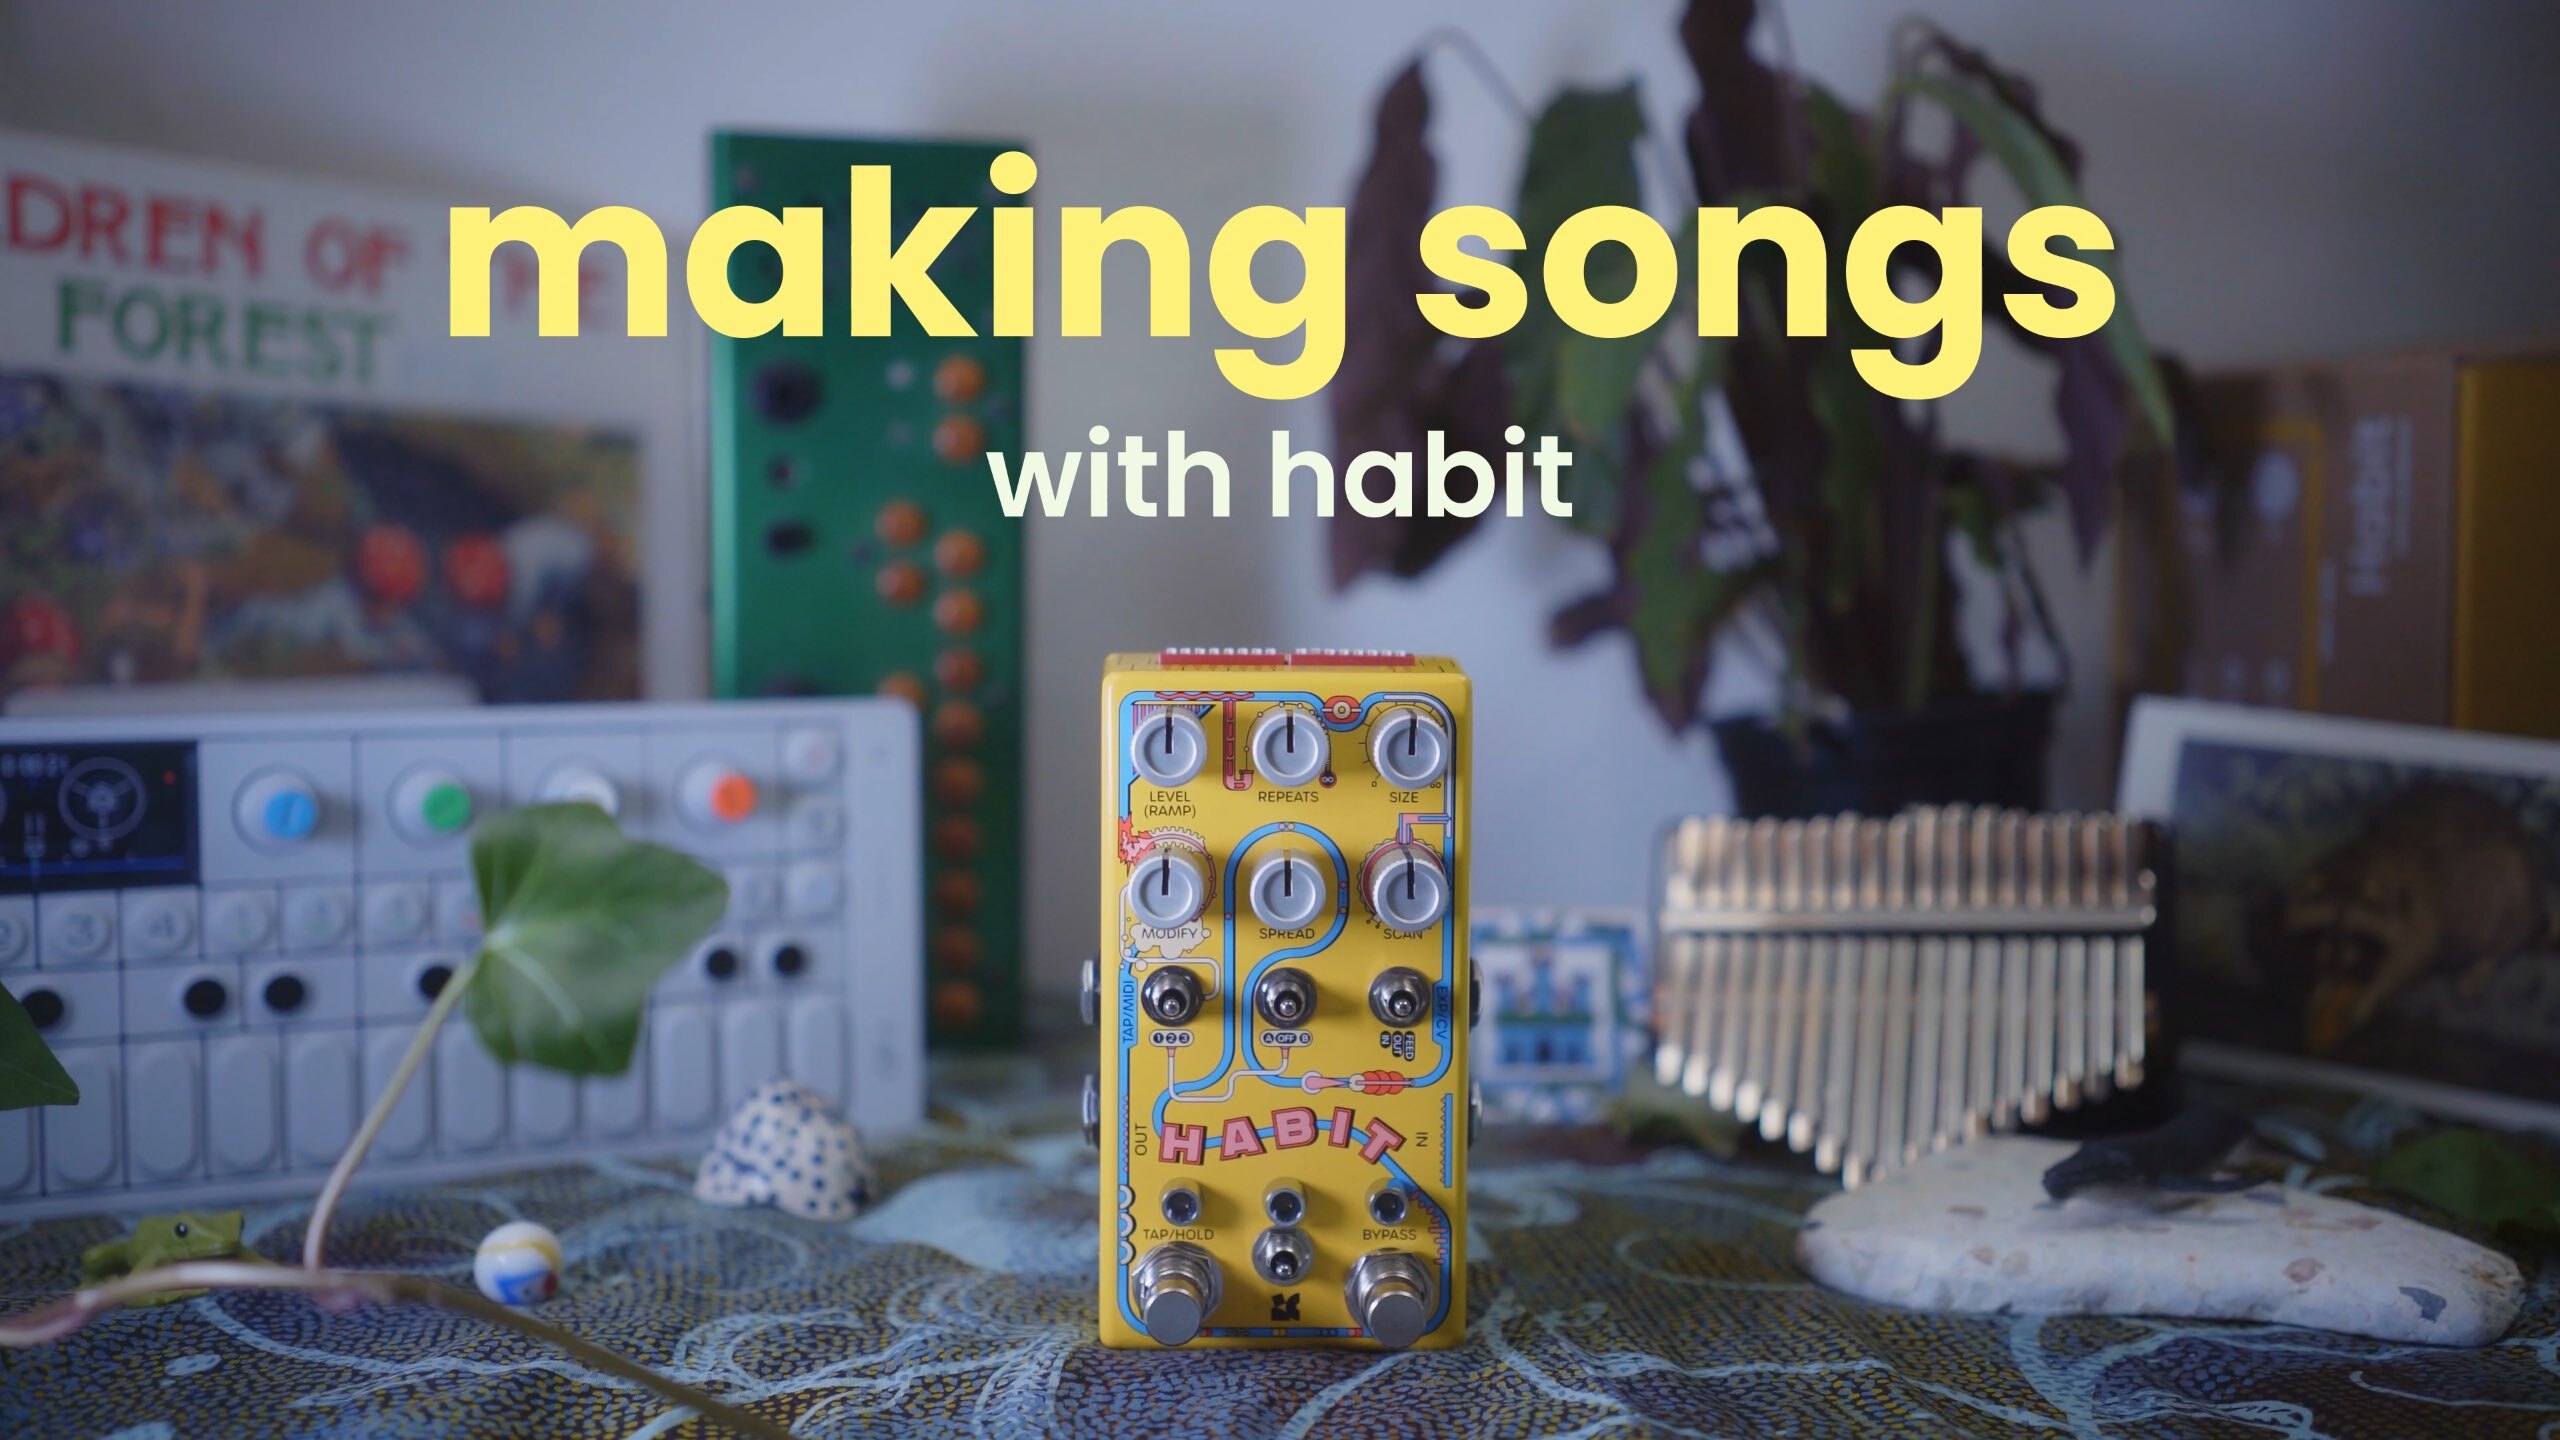 Habit — Chase Bliss